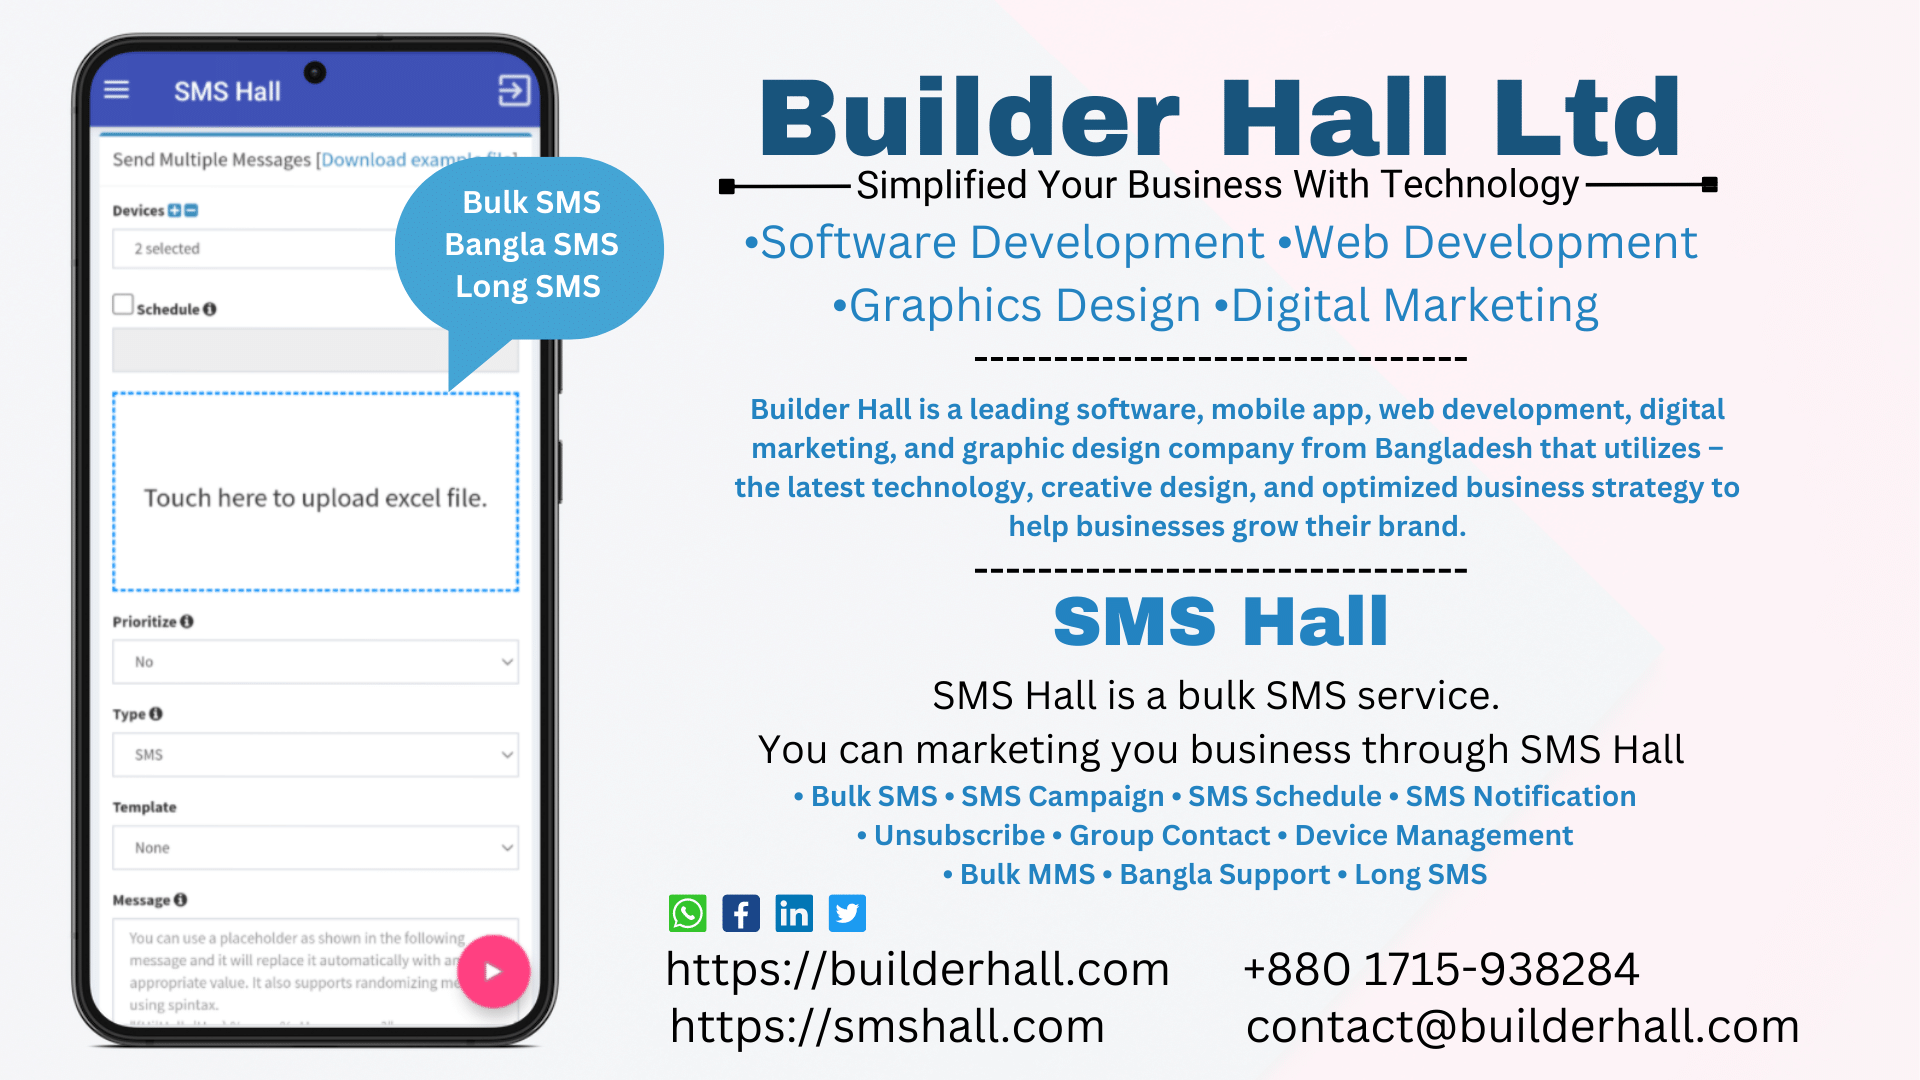 Builder Hall Ltd